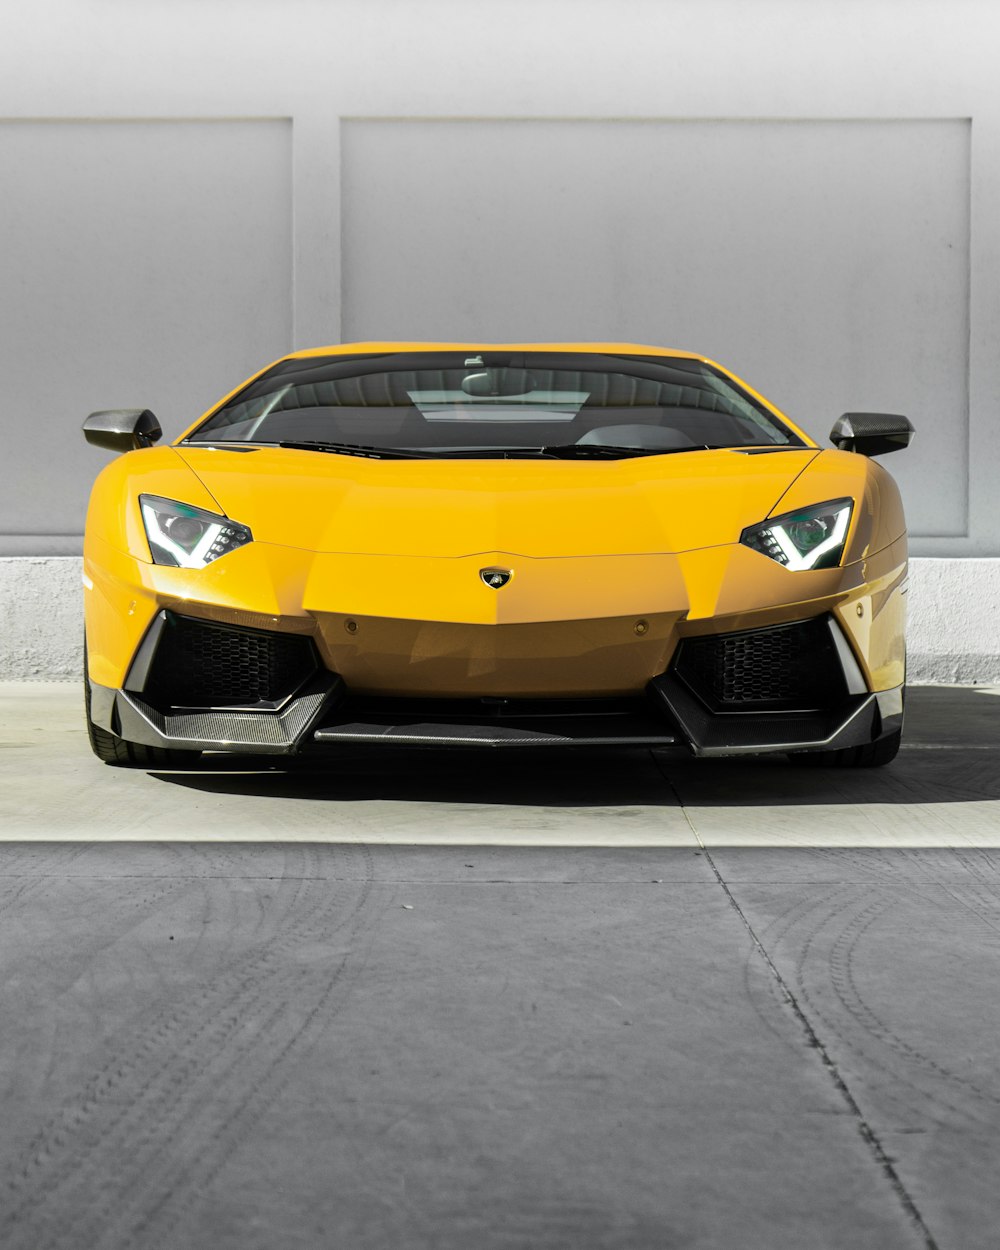 Gelber Lamborghini Aventador auf grauer Betonstraße geparkt